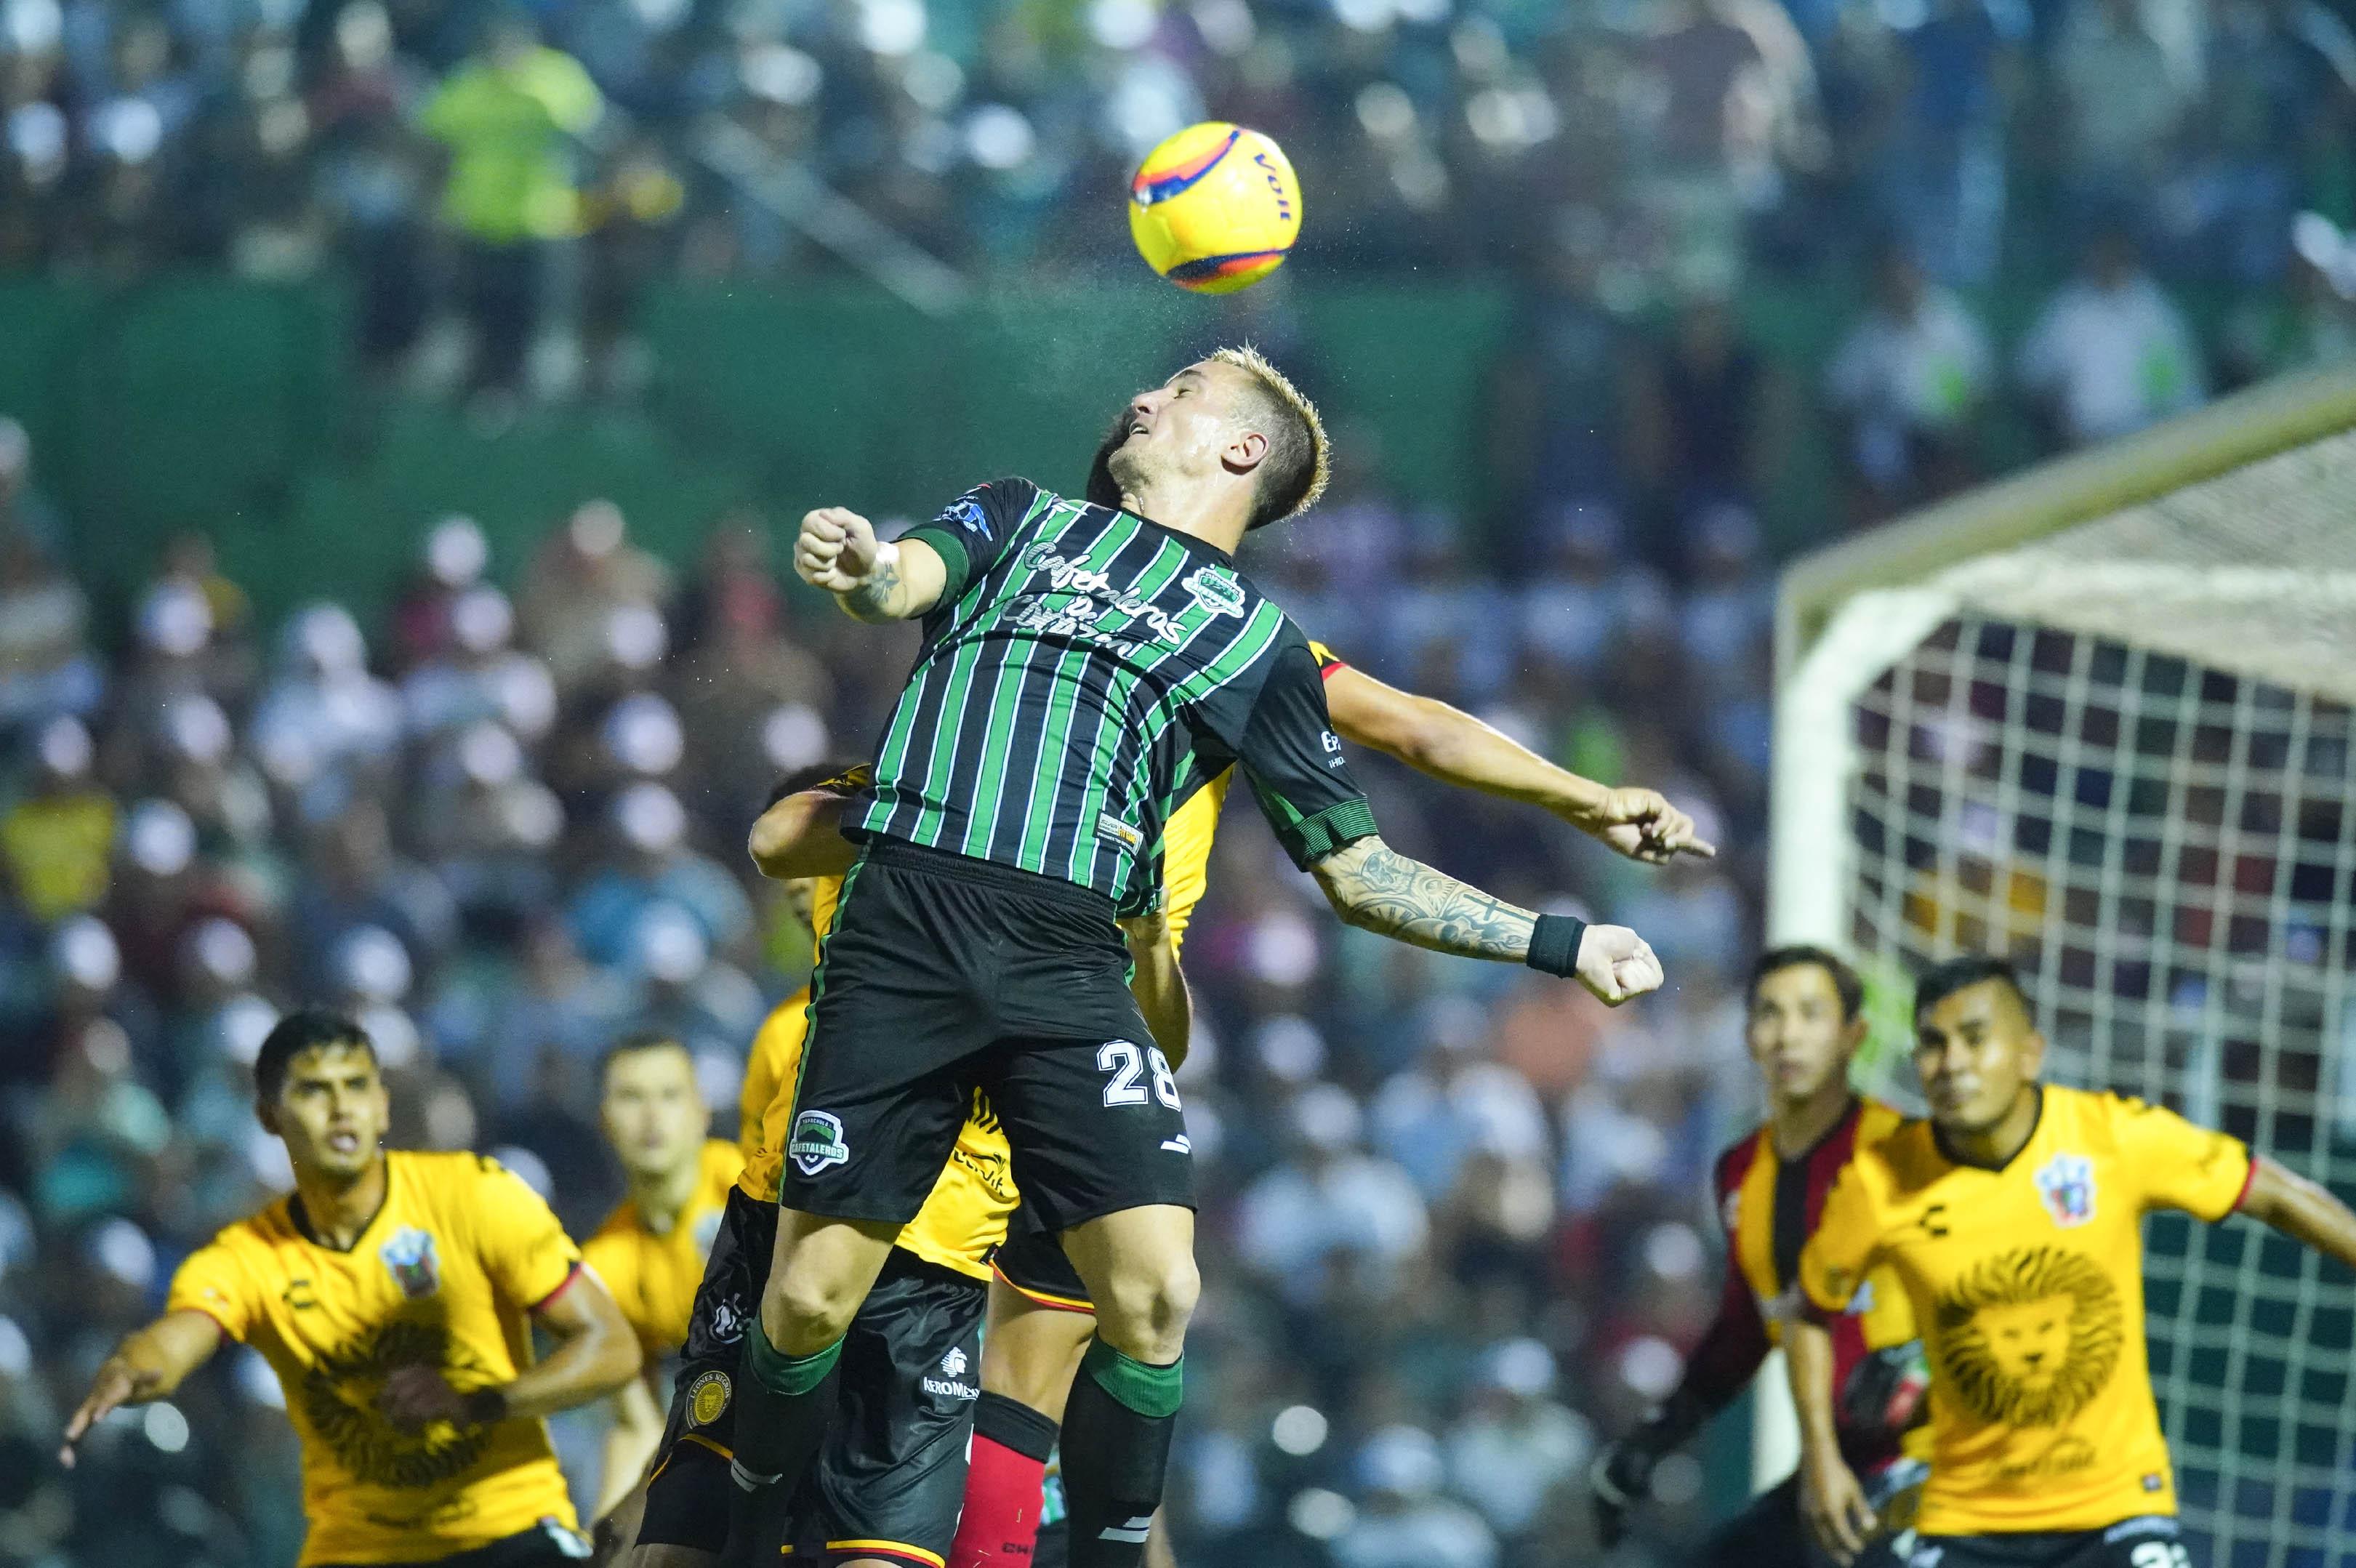 La vuelta se jugará en el Jalisco. Source: Ascenso MX.